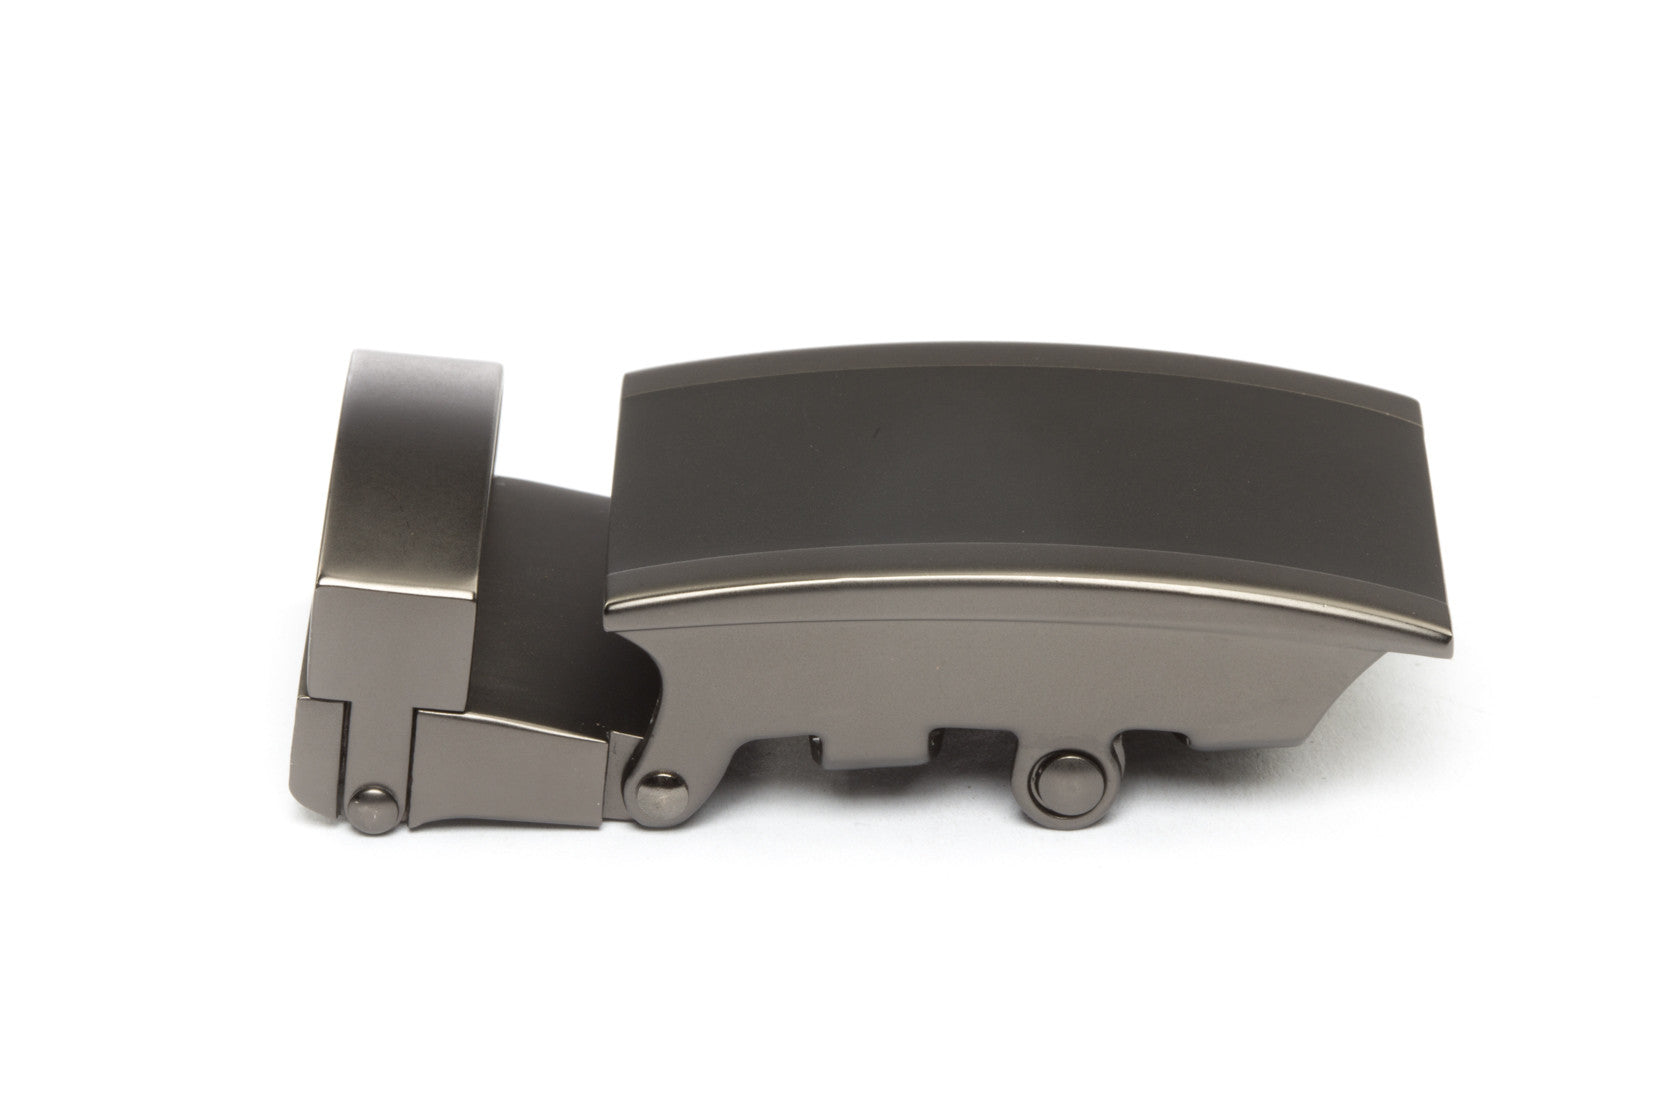 Men's onyx ratchet belt buckle in matte gunmetal with a 1.25-inch width, right side view.